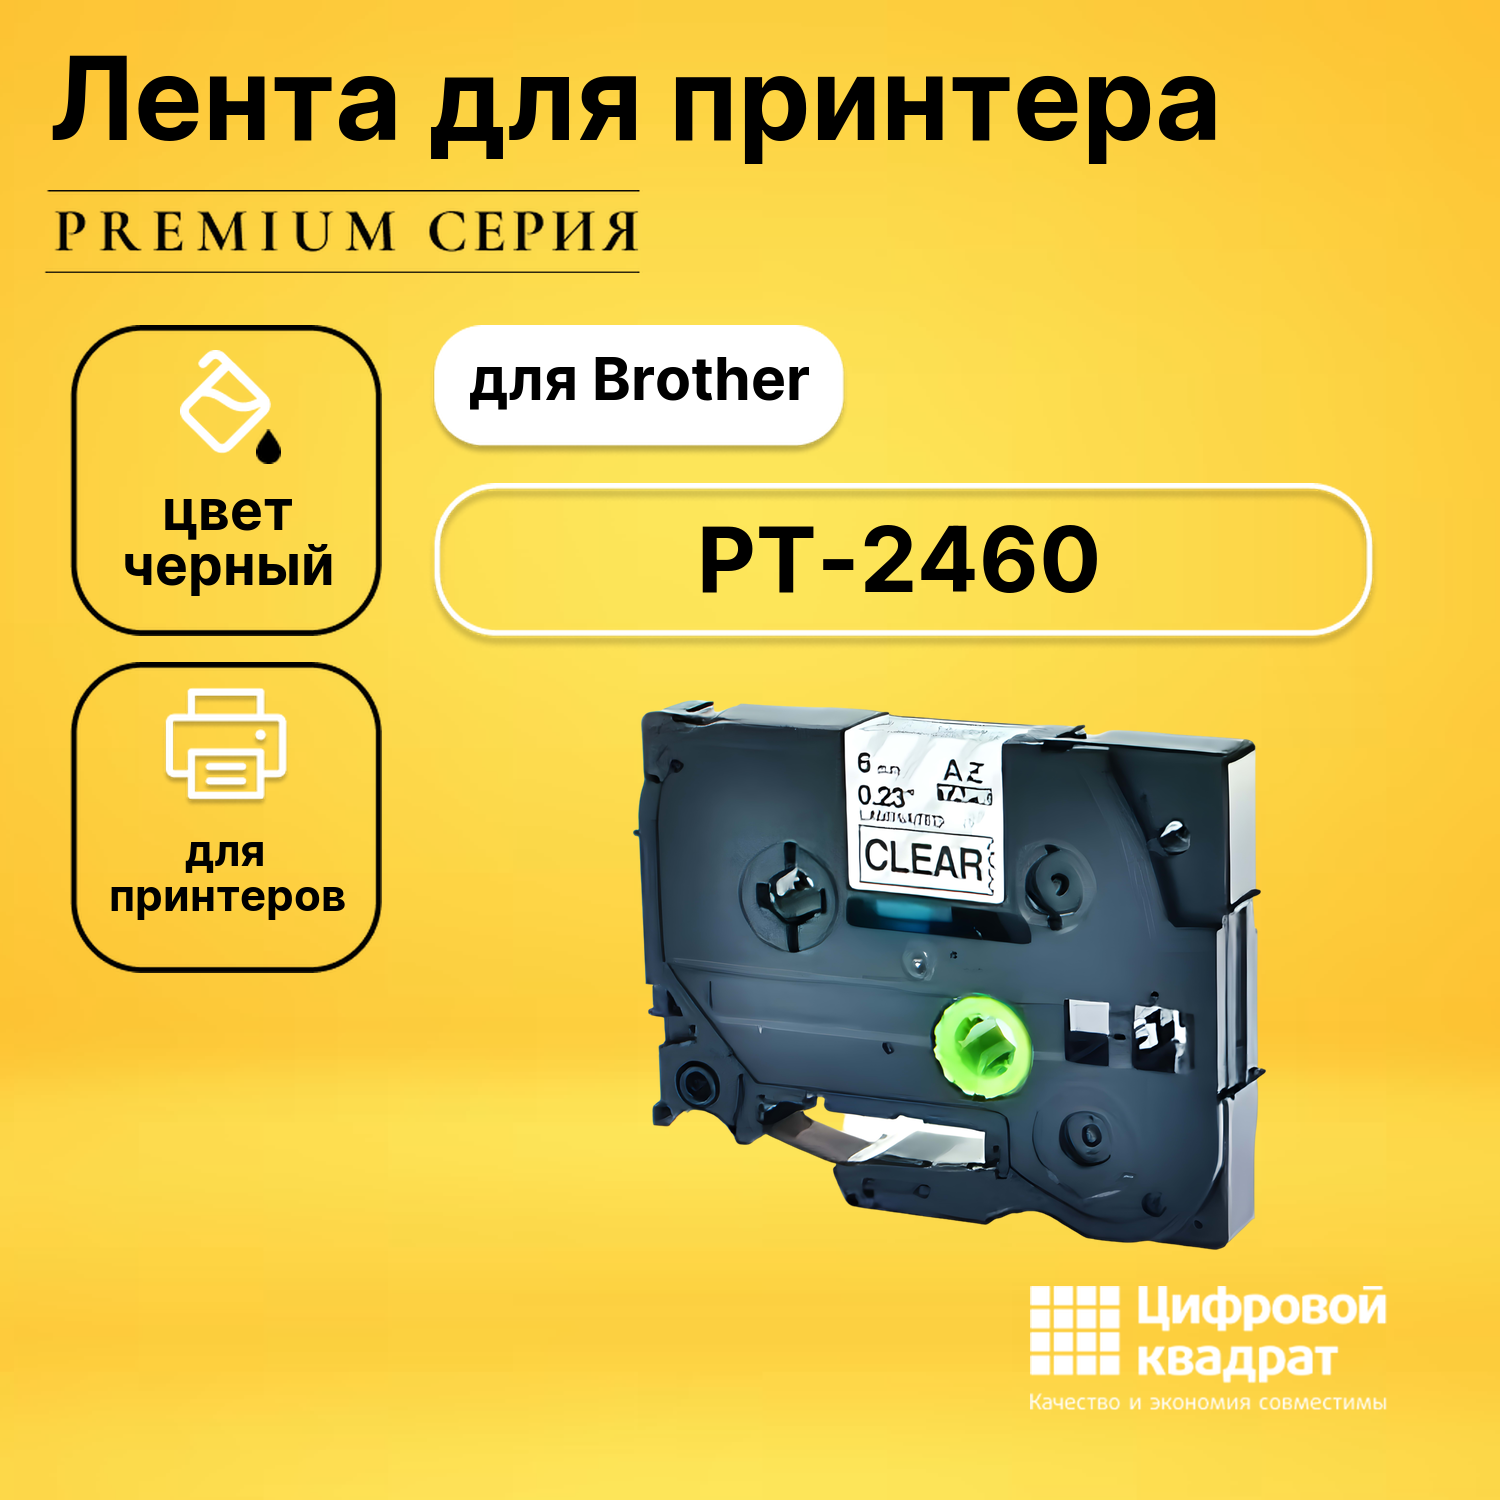 Лента для печати этикеток и наклеек для Brother PT-2460